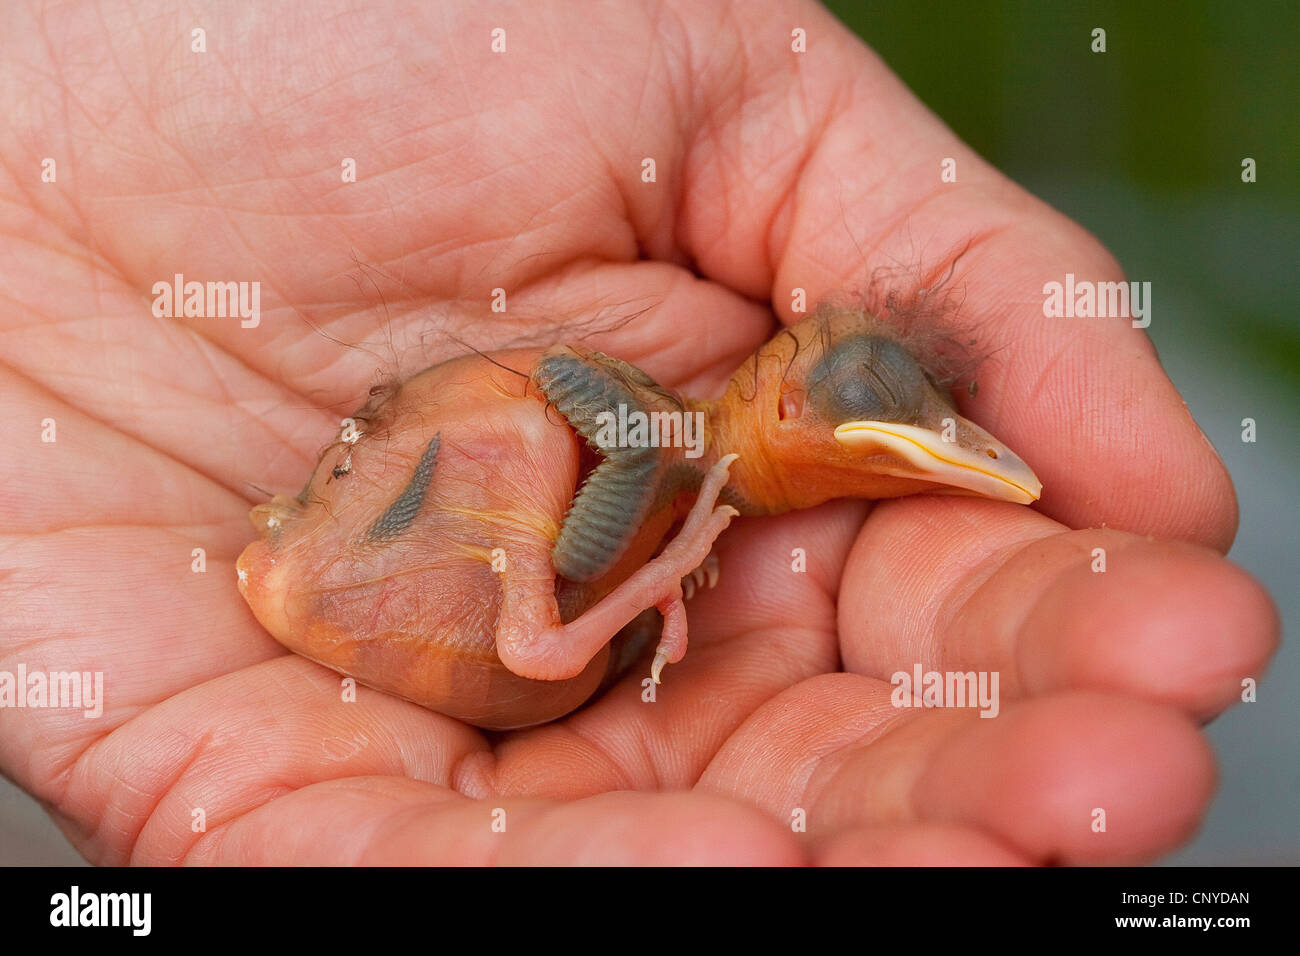 Merlo (Turdus merula), ancora calvo pollo orfani è giacente in una mano sleeping Foto Stock